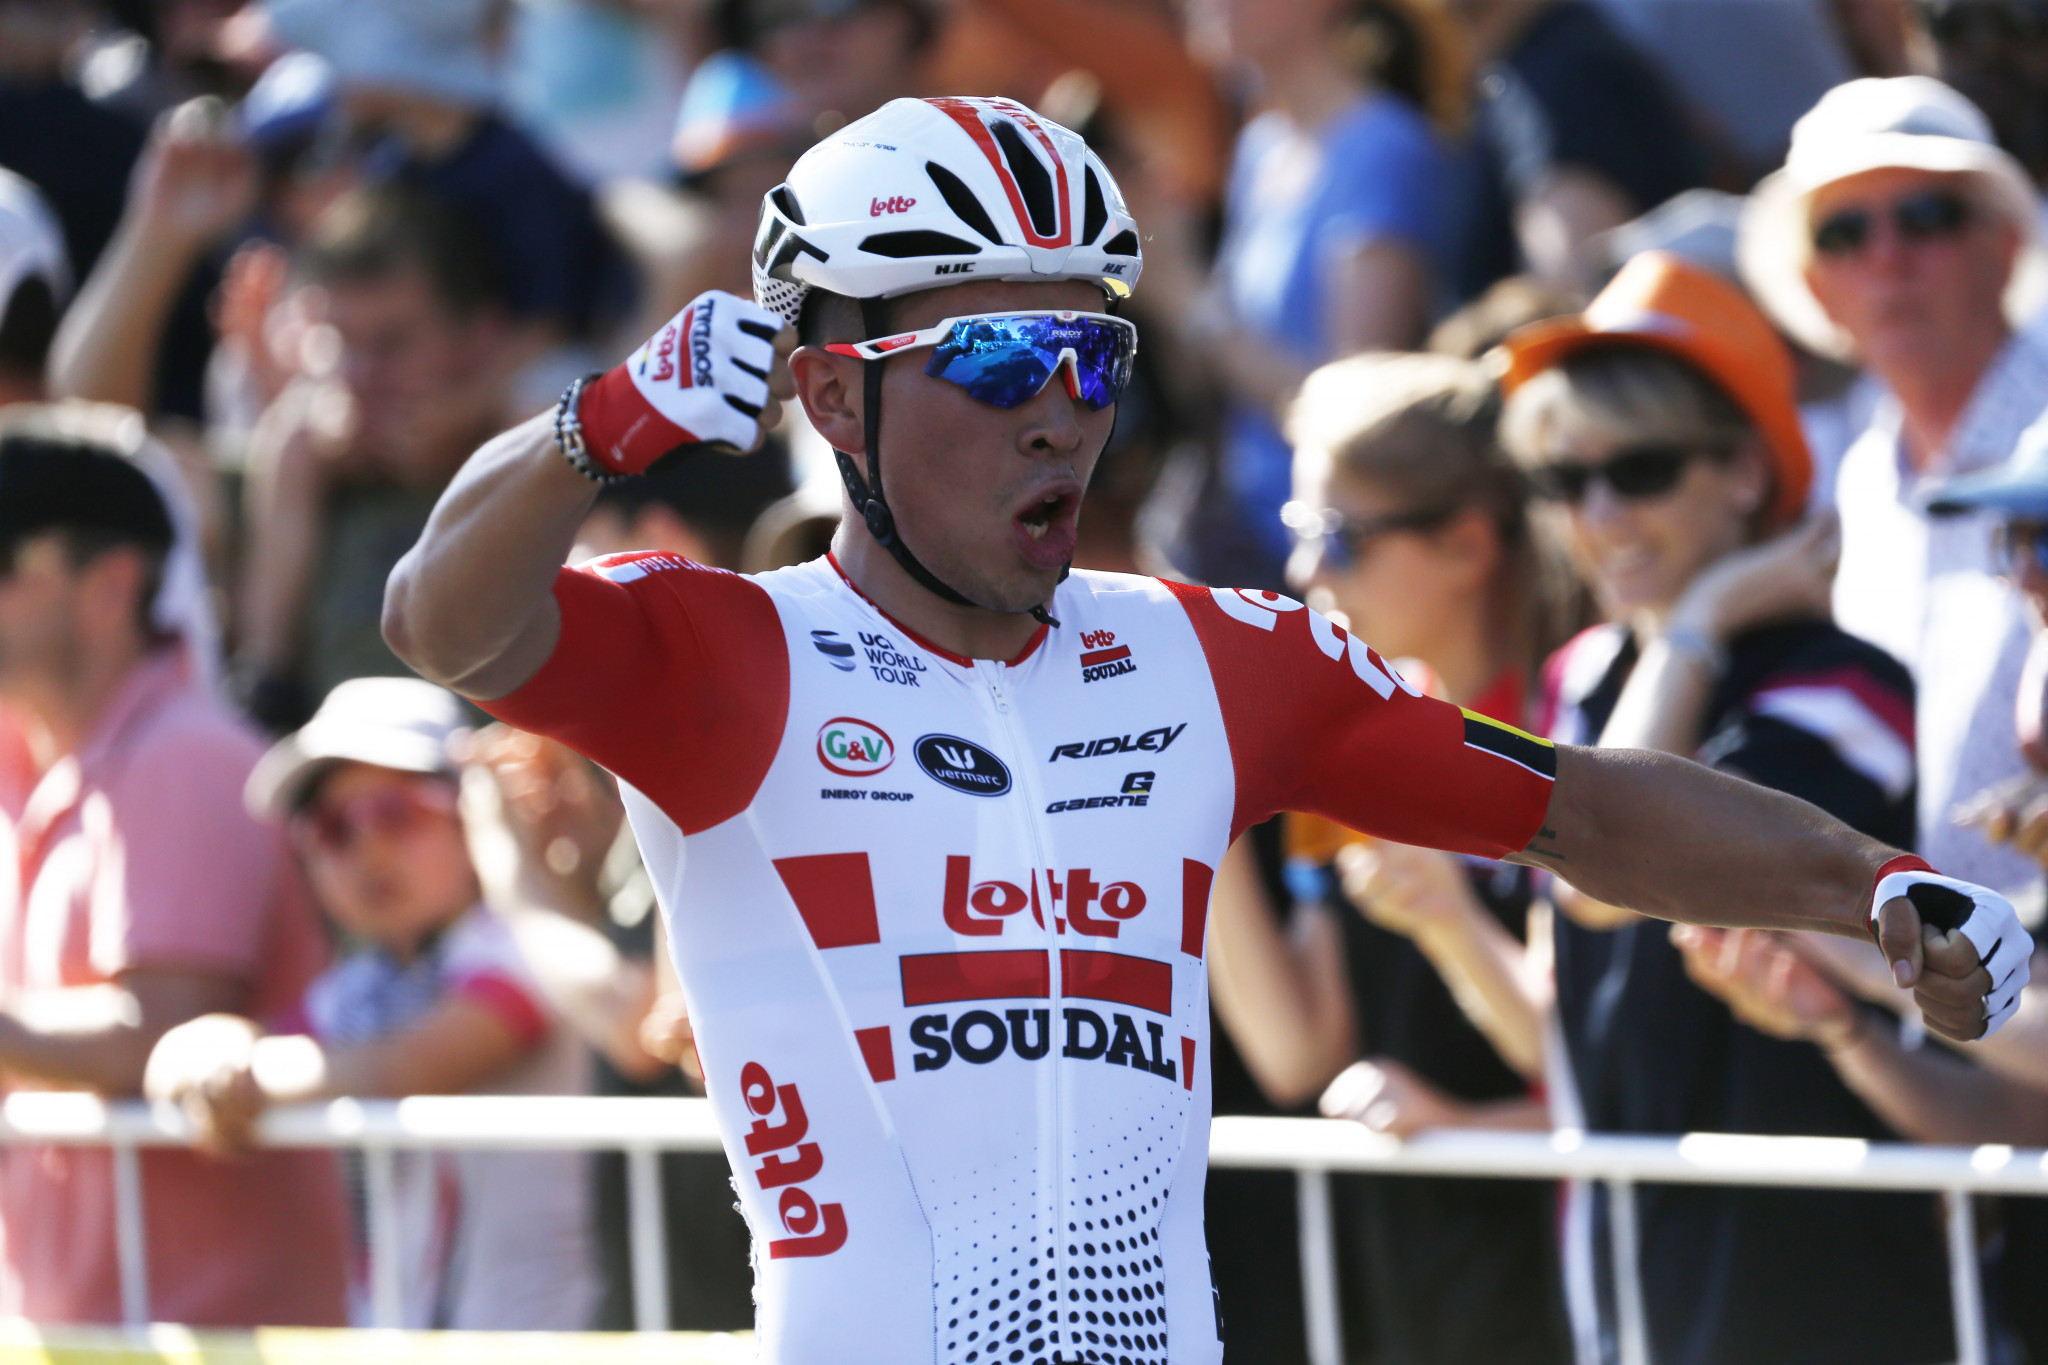 Tour Down Under to launch 2019 UCI WorldTour season